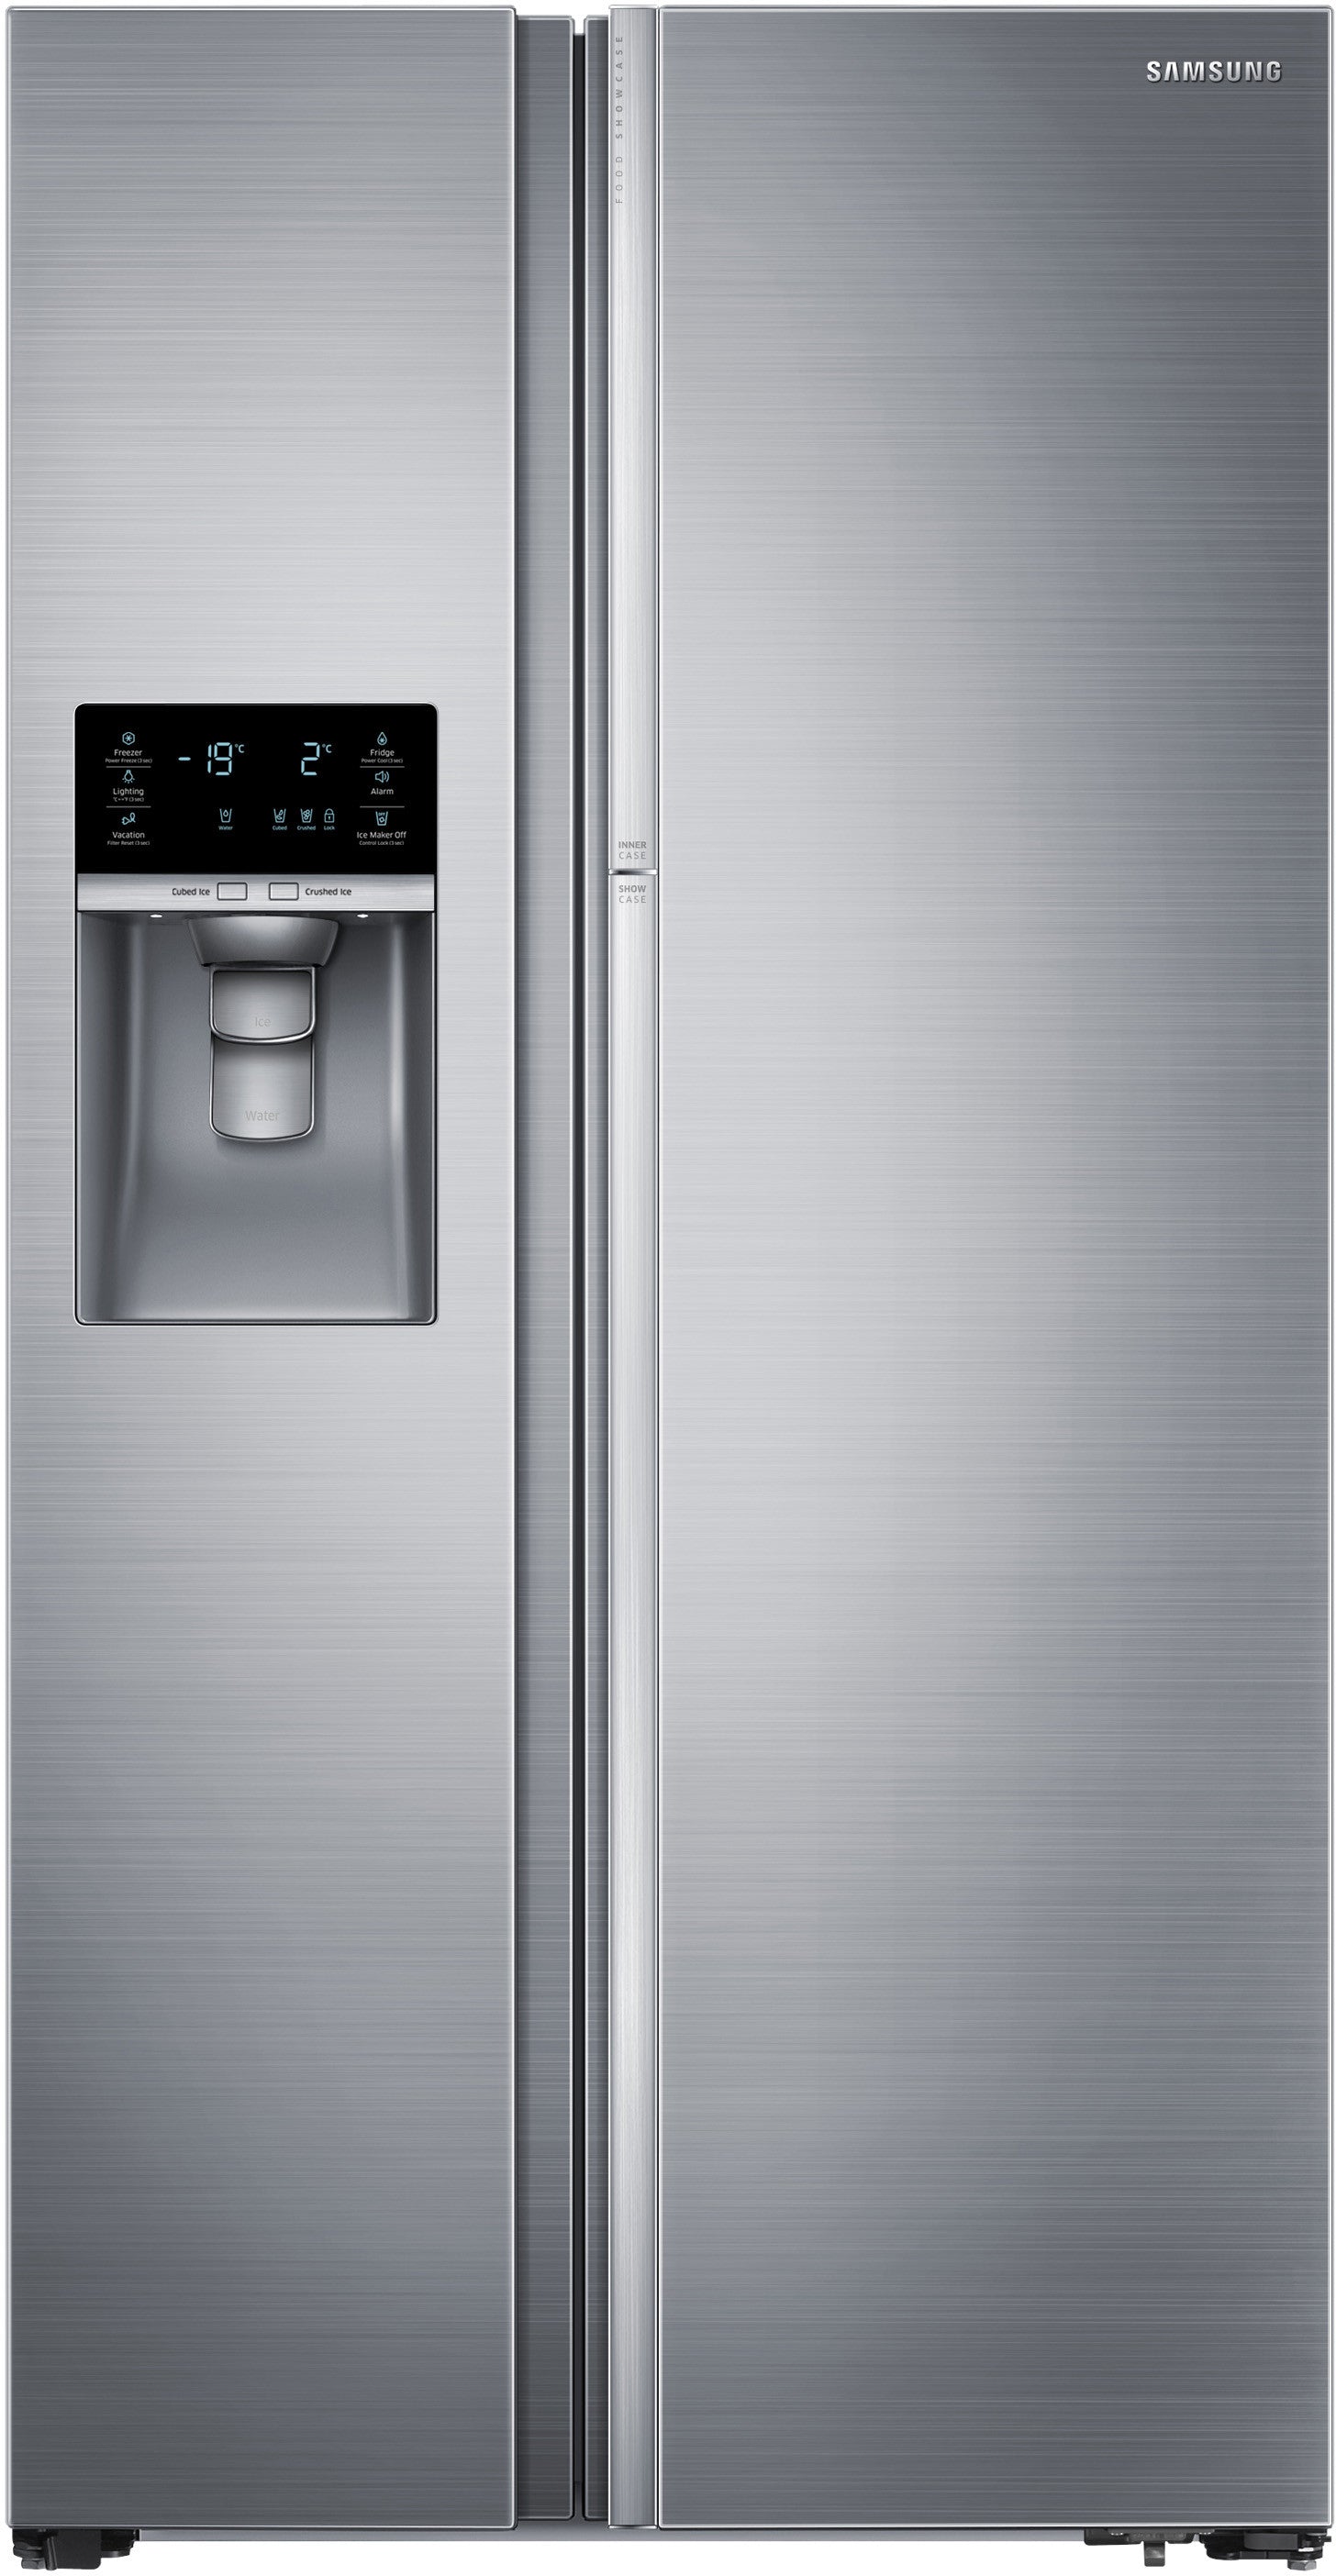 Samsung RH22H8010SR/AA 22 Cu. Ft. Counter-depth Side By Side Refrigerator